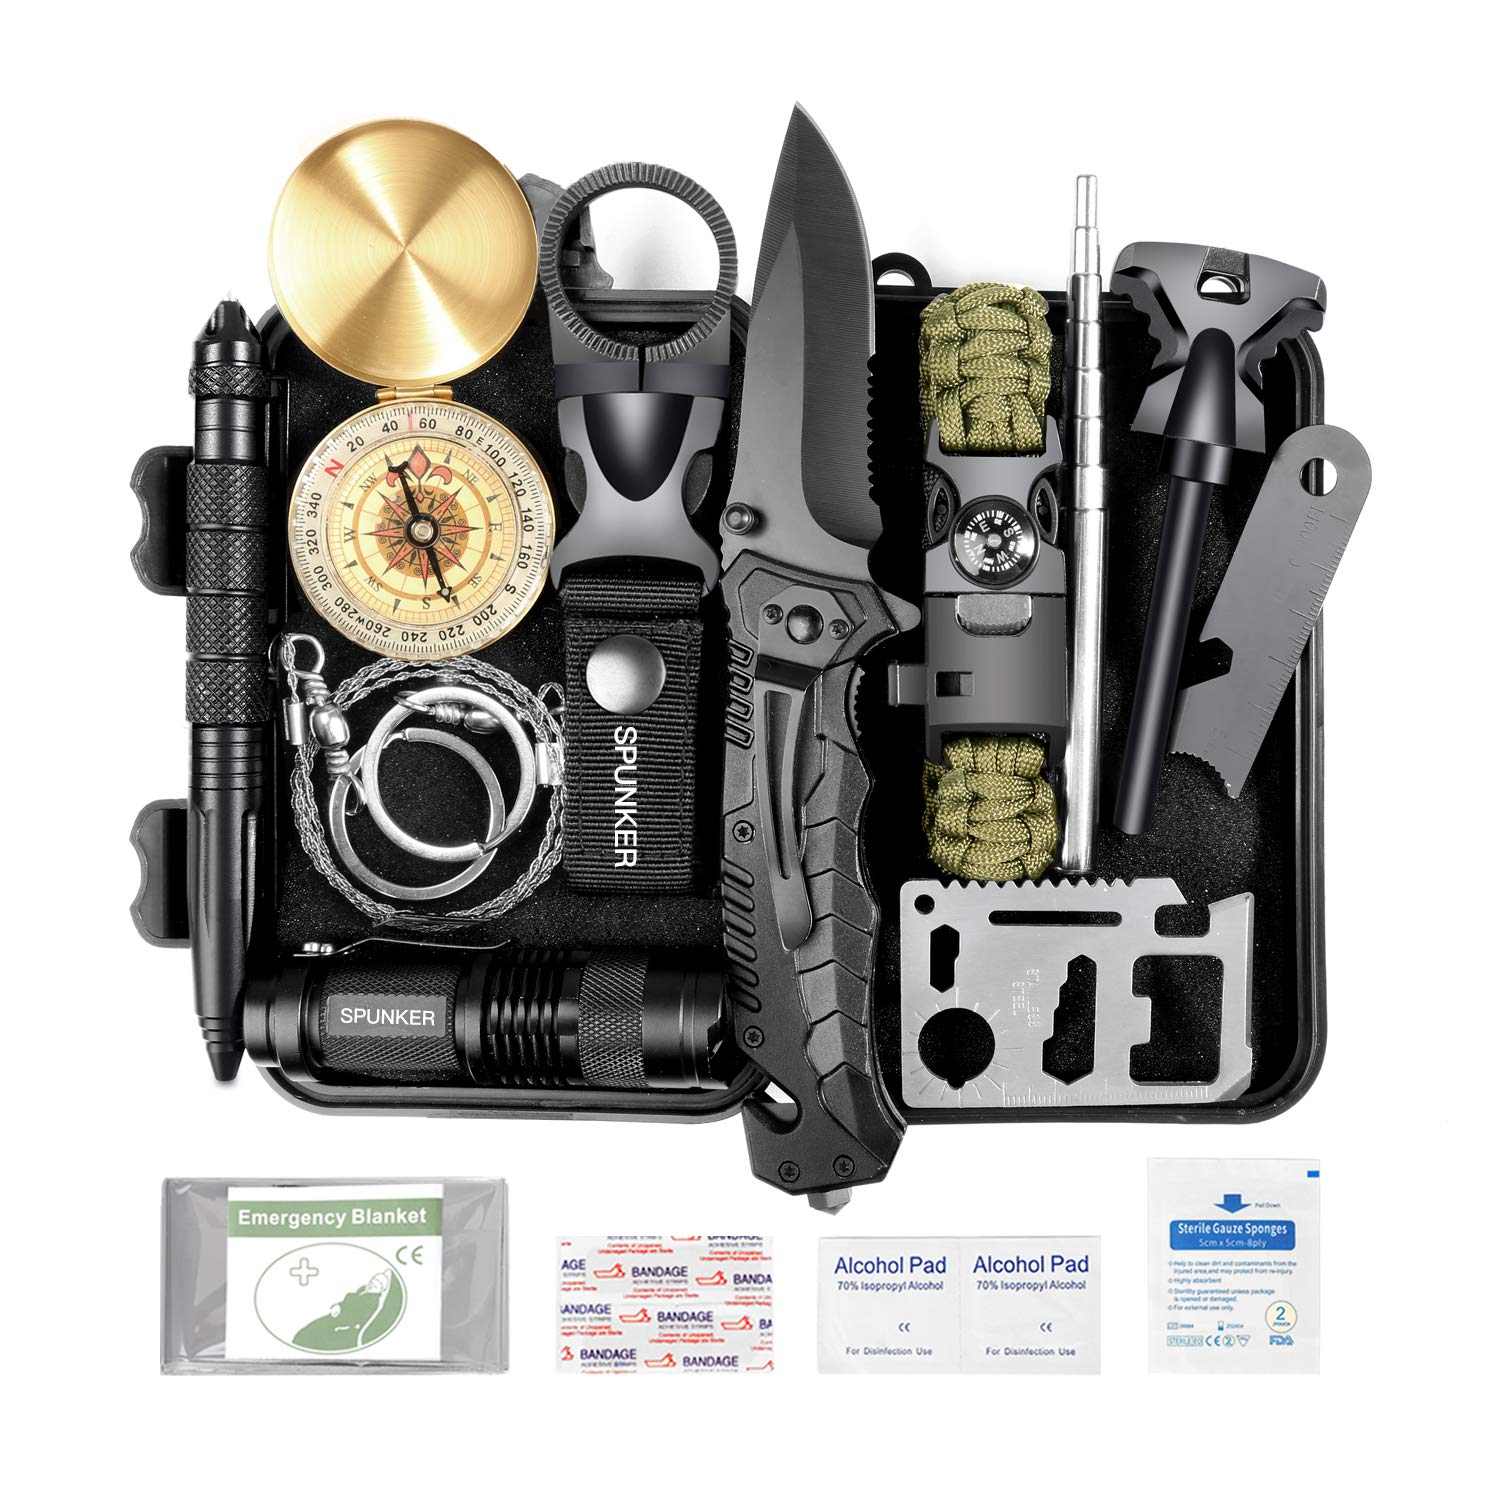 SPUNKER Survival Gear - 15 in 1 Emergency Backpack Survival Kit